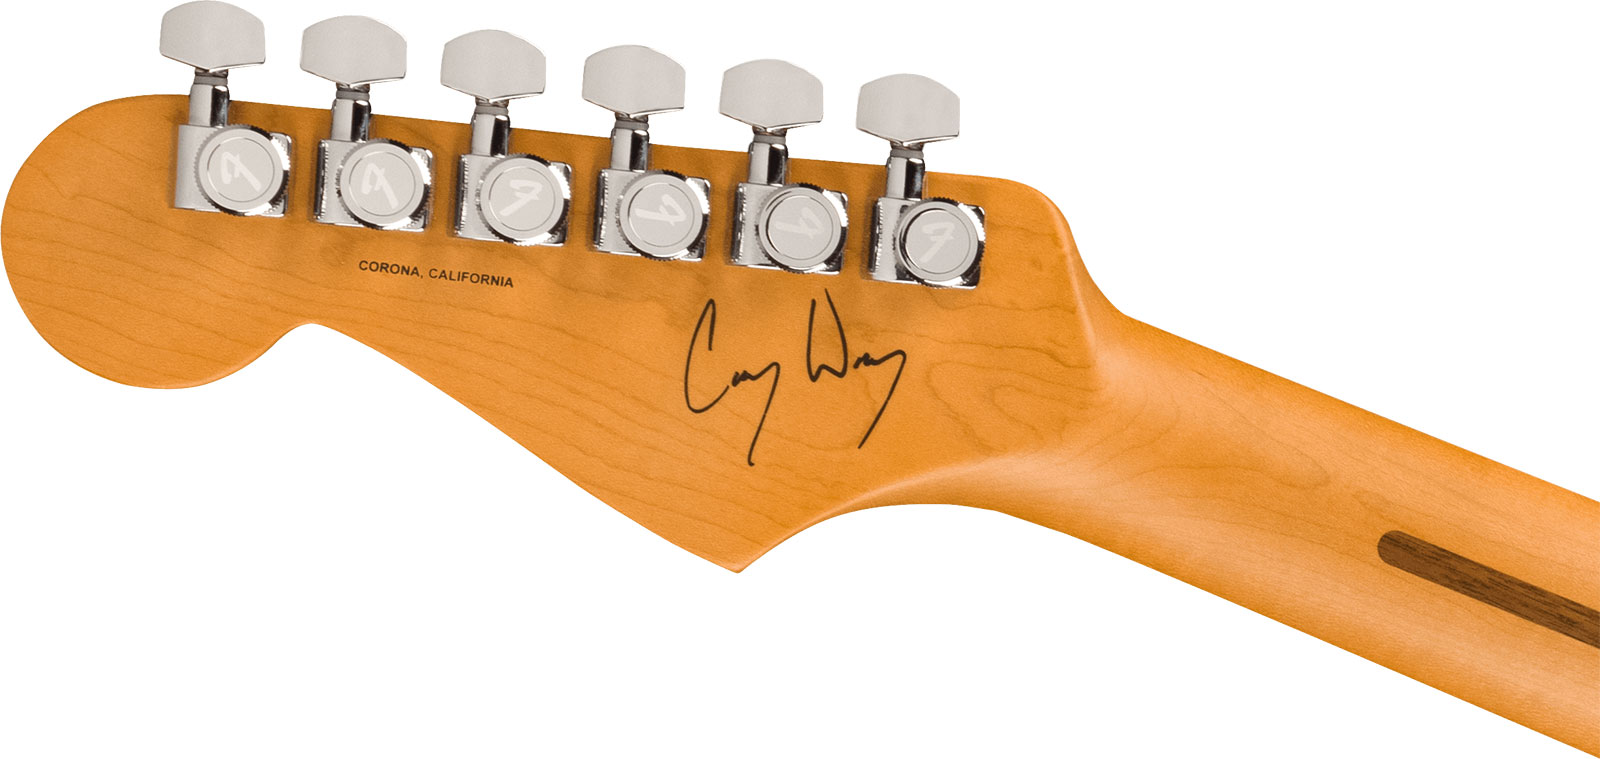 Fender Cory Wong Strat Ltd Signature Usa Stss Trem Rw - Daphne Blue - Str shape electric guitar - Variation 3